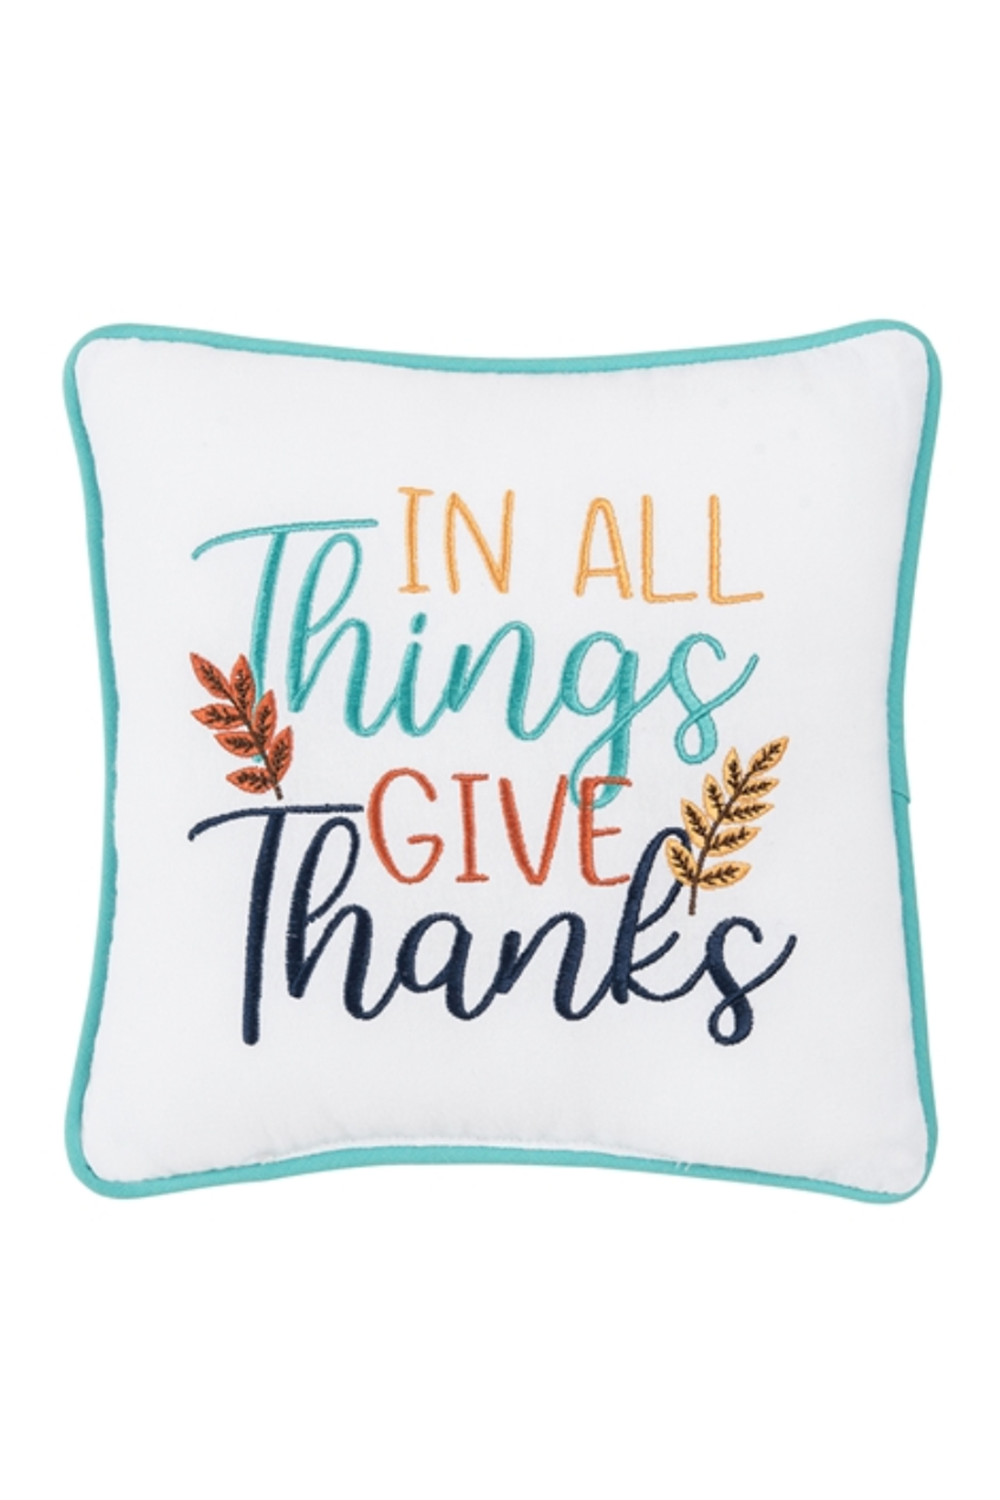 Mini Thanksgiving Pillow - Give Thanks